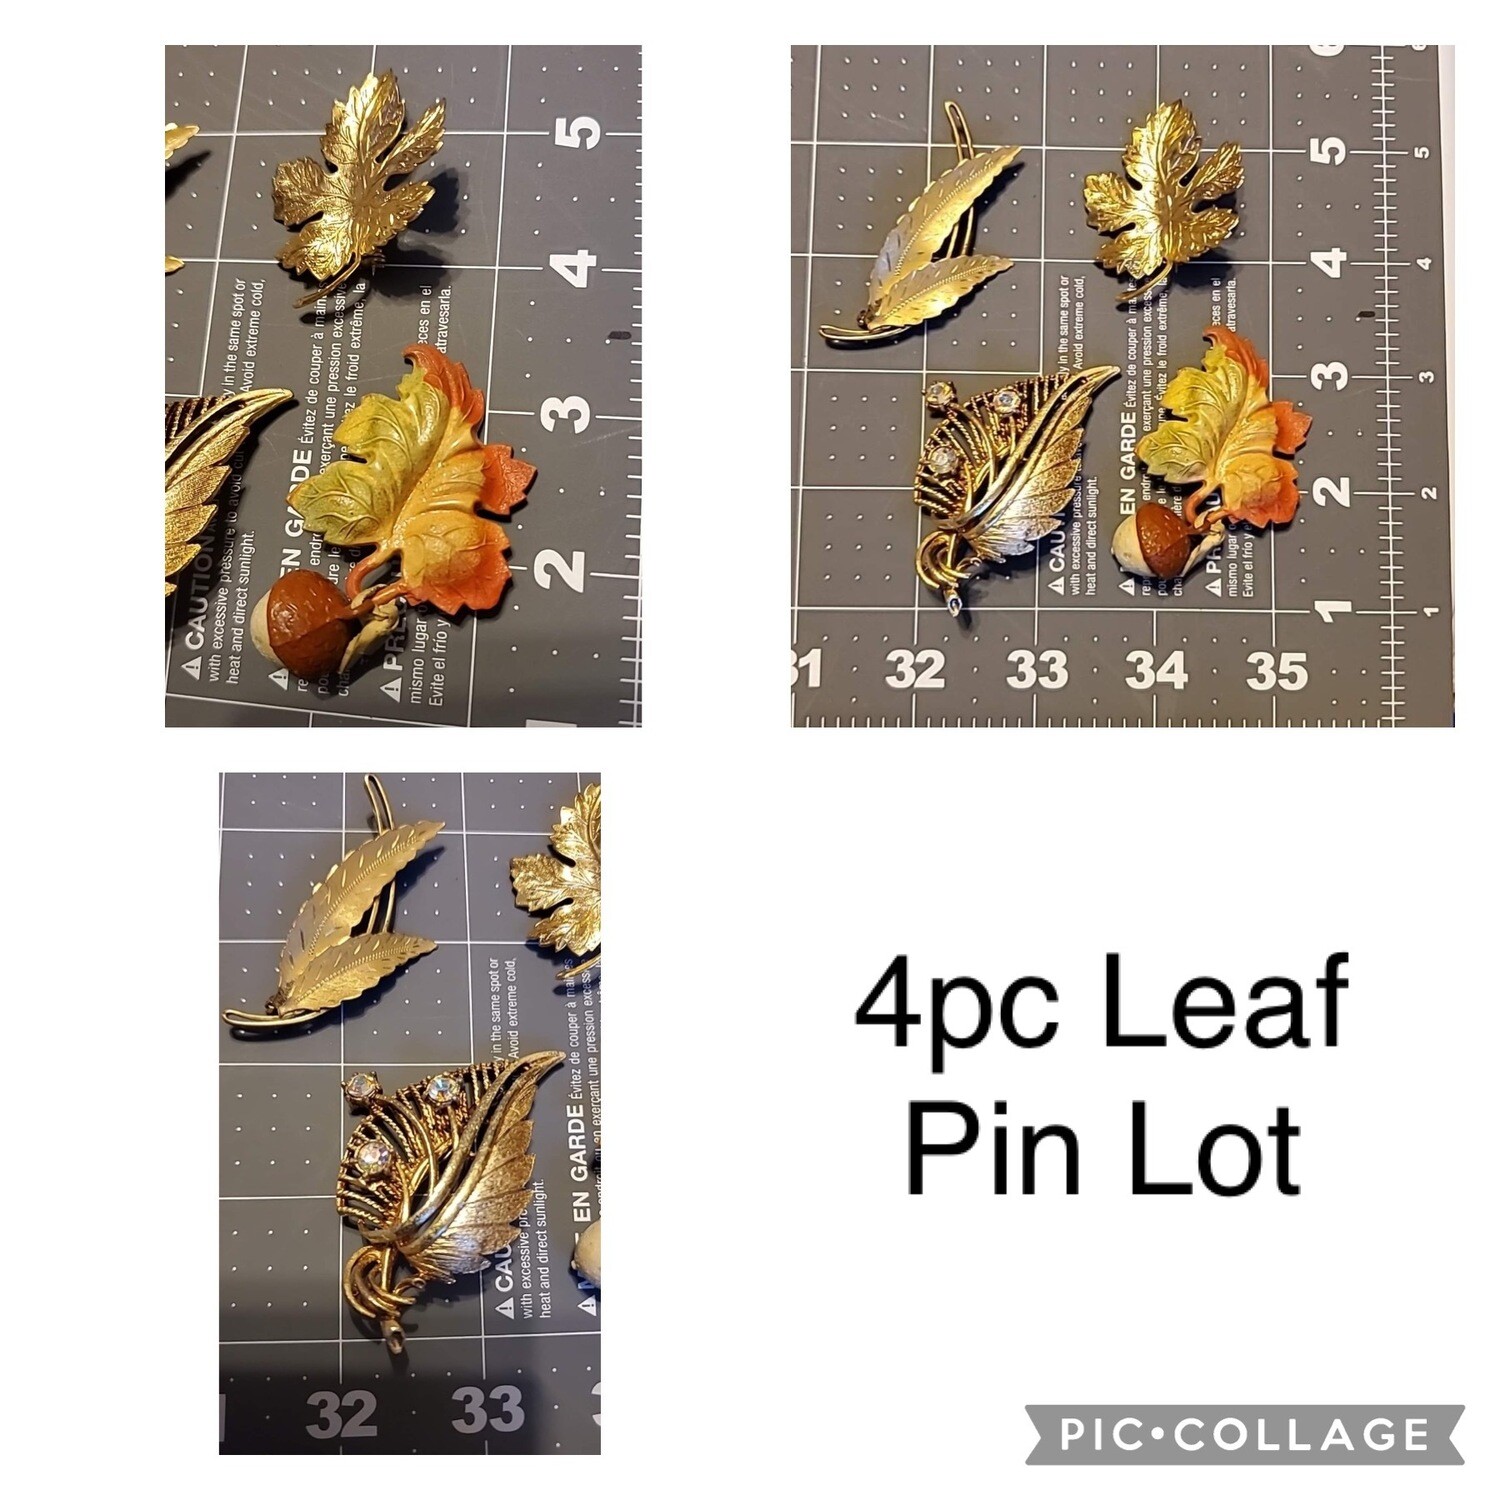 4pc Leaf Pin Lot